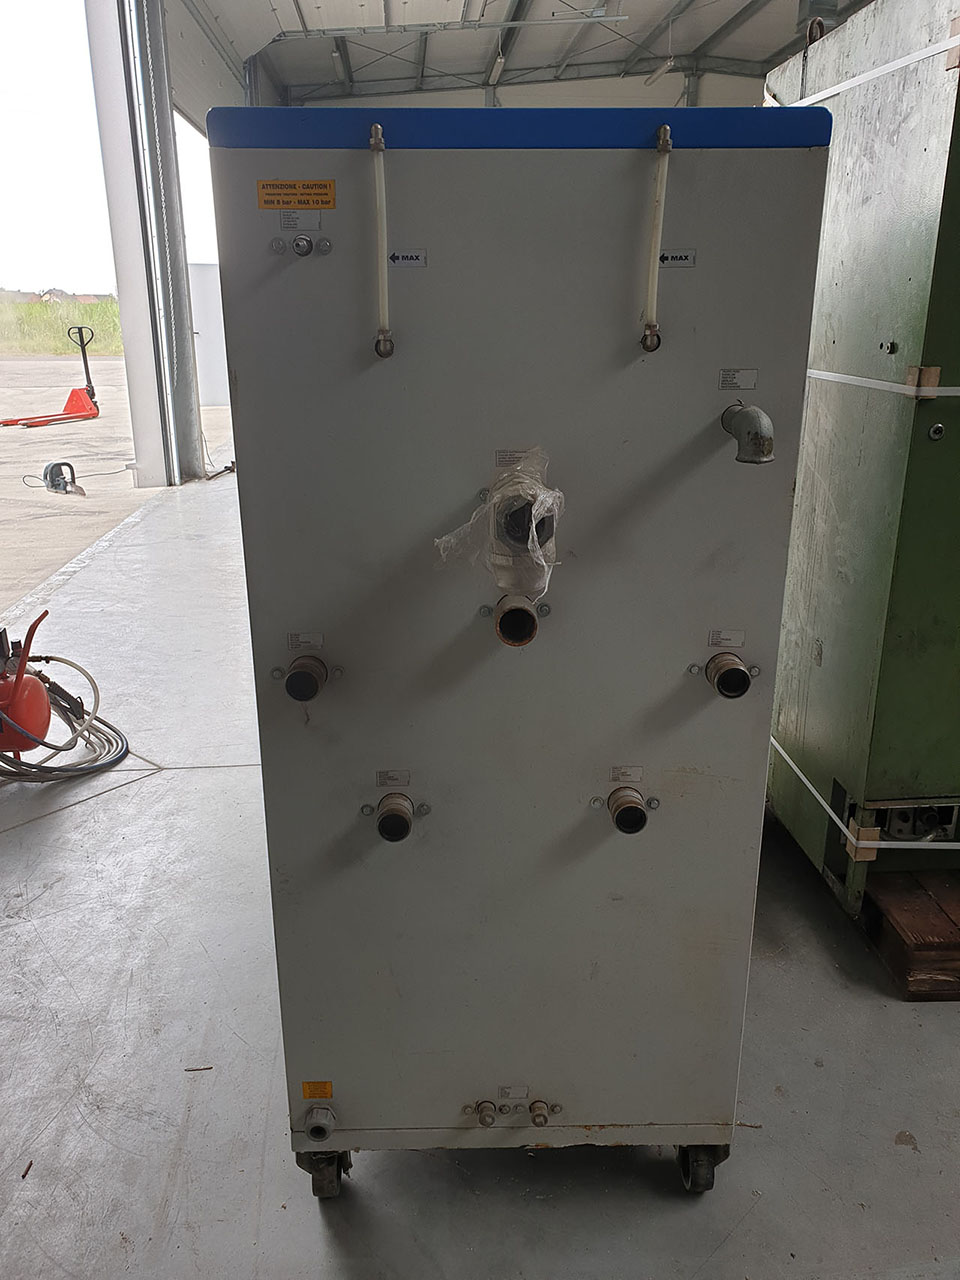 Refrigeratore d'olio industriale Frigo CTOH 27/300/SM/2Z/X ZU2087